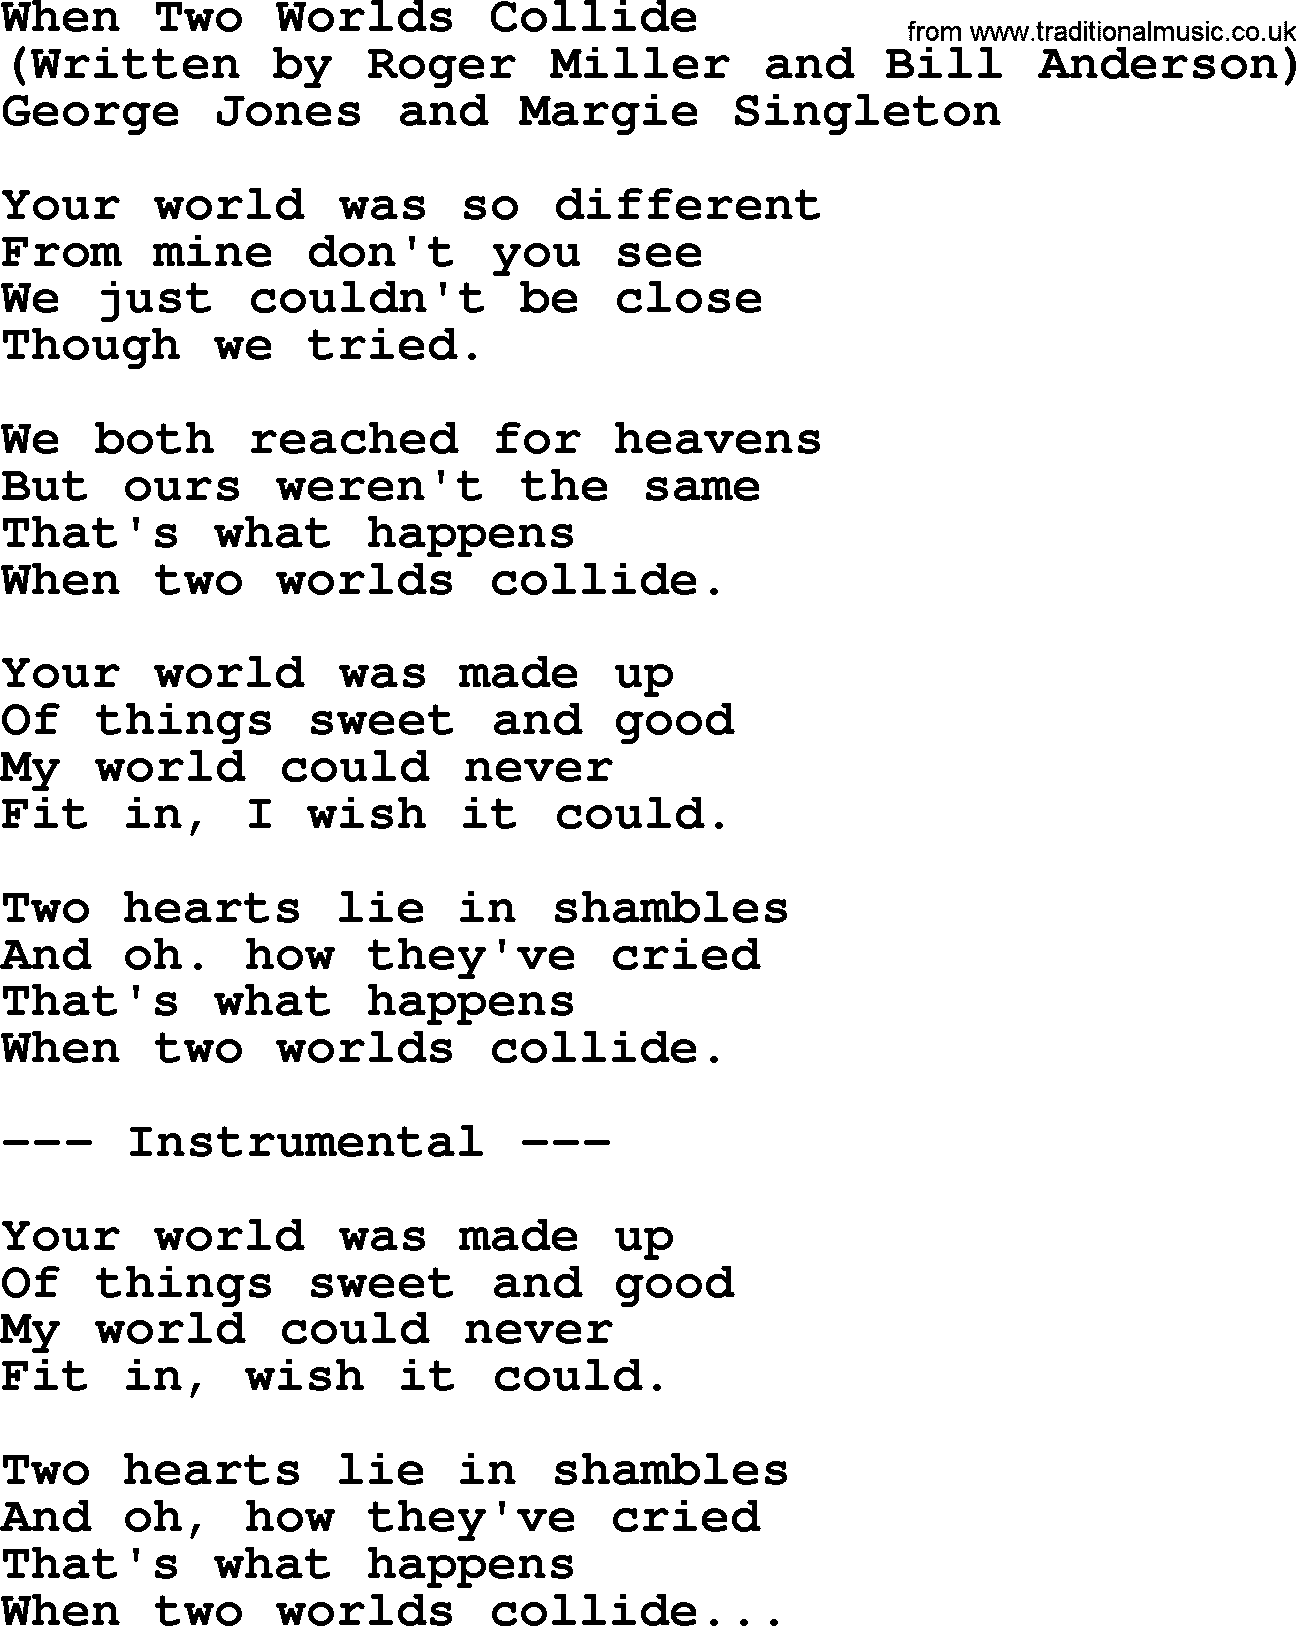 George Jones song: When Two Worlds Collide, lyrics